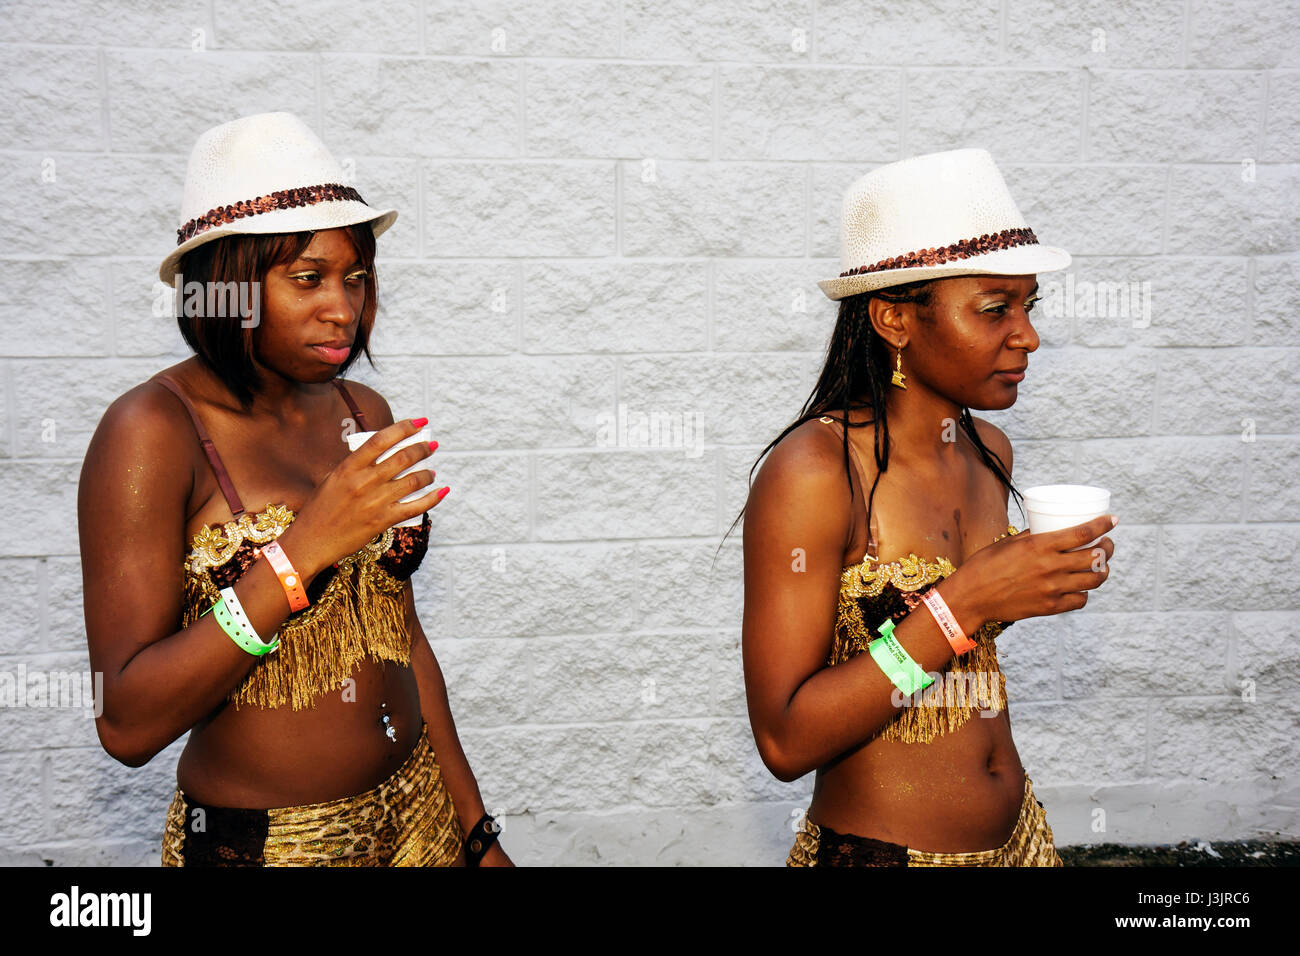 Miami Florida,NE Second 2nd Avenue,Miami Caribbean Carnival,costume,festival,festivals,parade,Black Blacks African Africans ethnic minority,adult adul Stock Photo